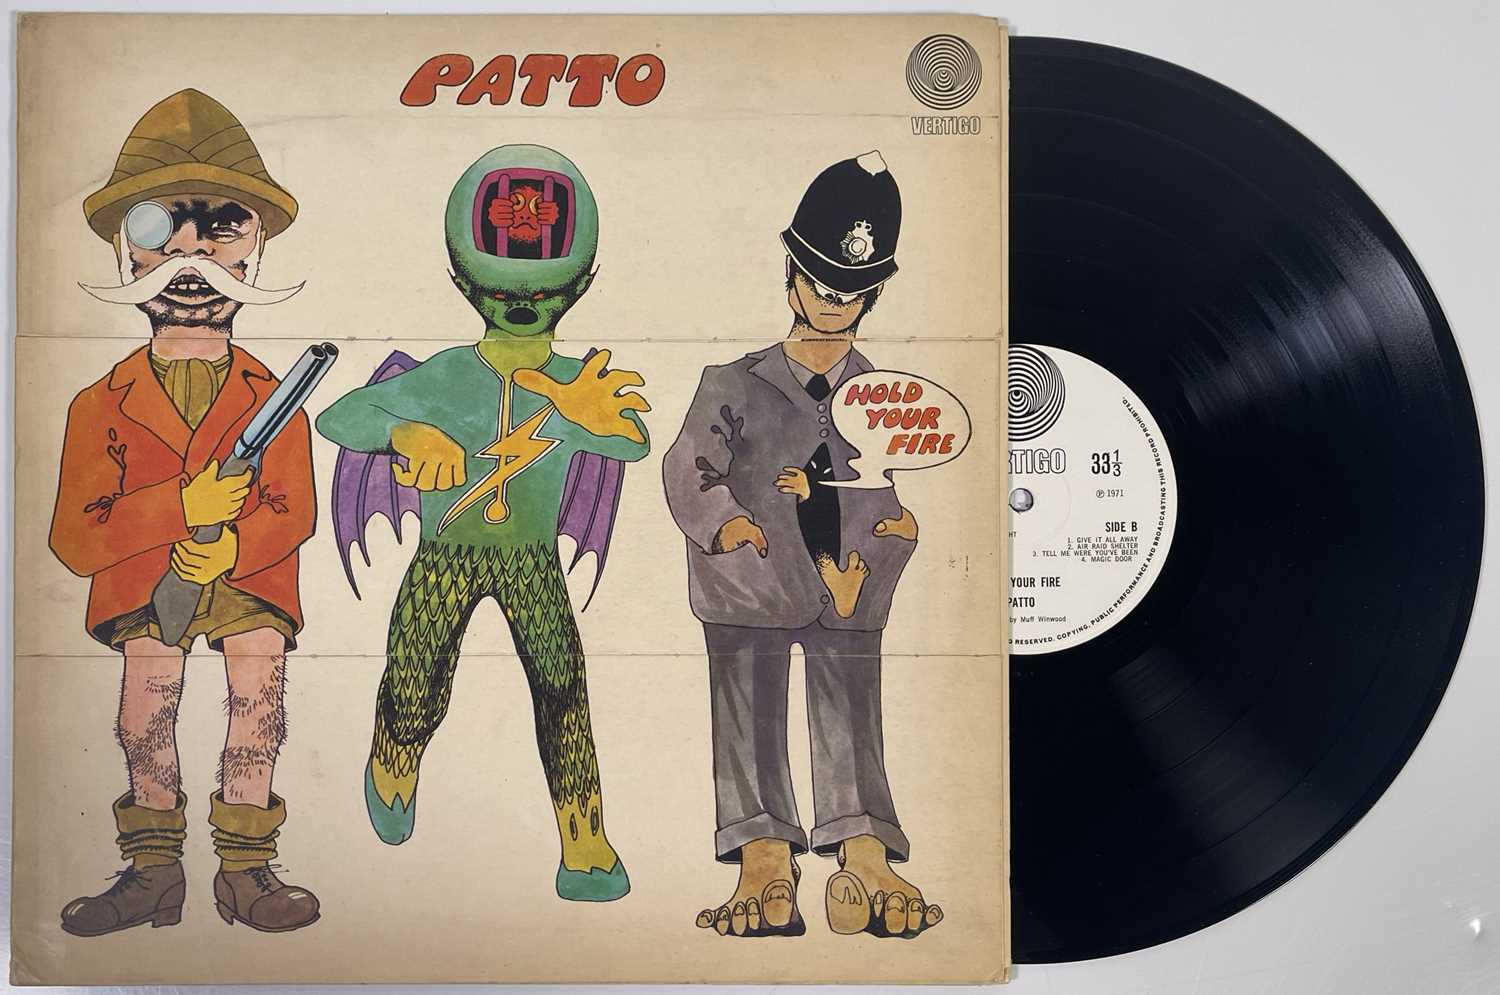 PATTO - HOLD YOUR FIRE LP (UK FIRST - SWIRL - VERTIGO 6360 032)